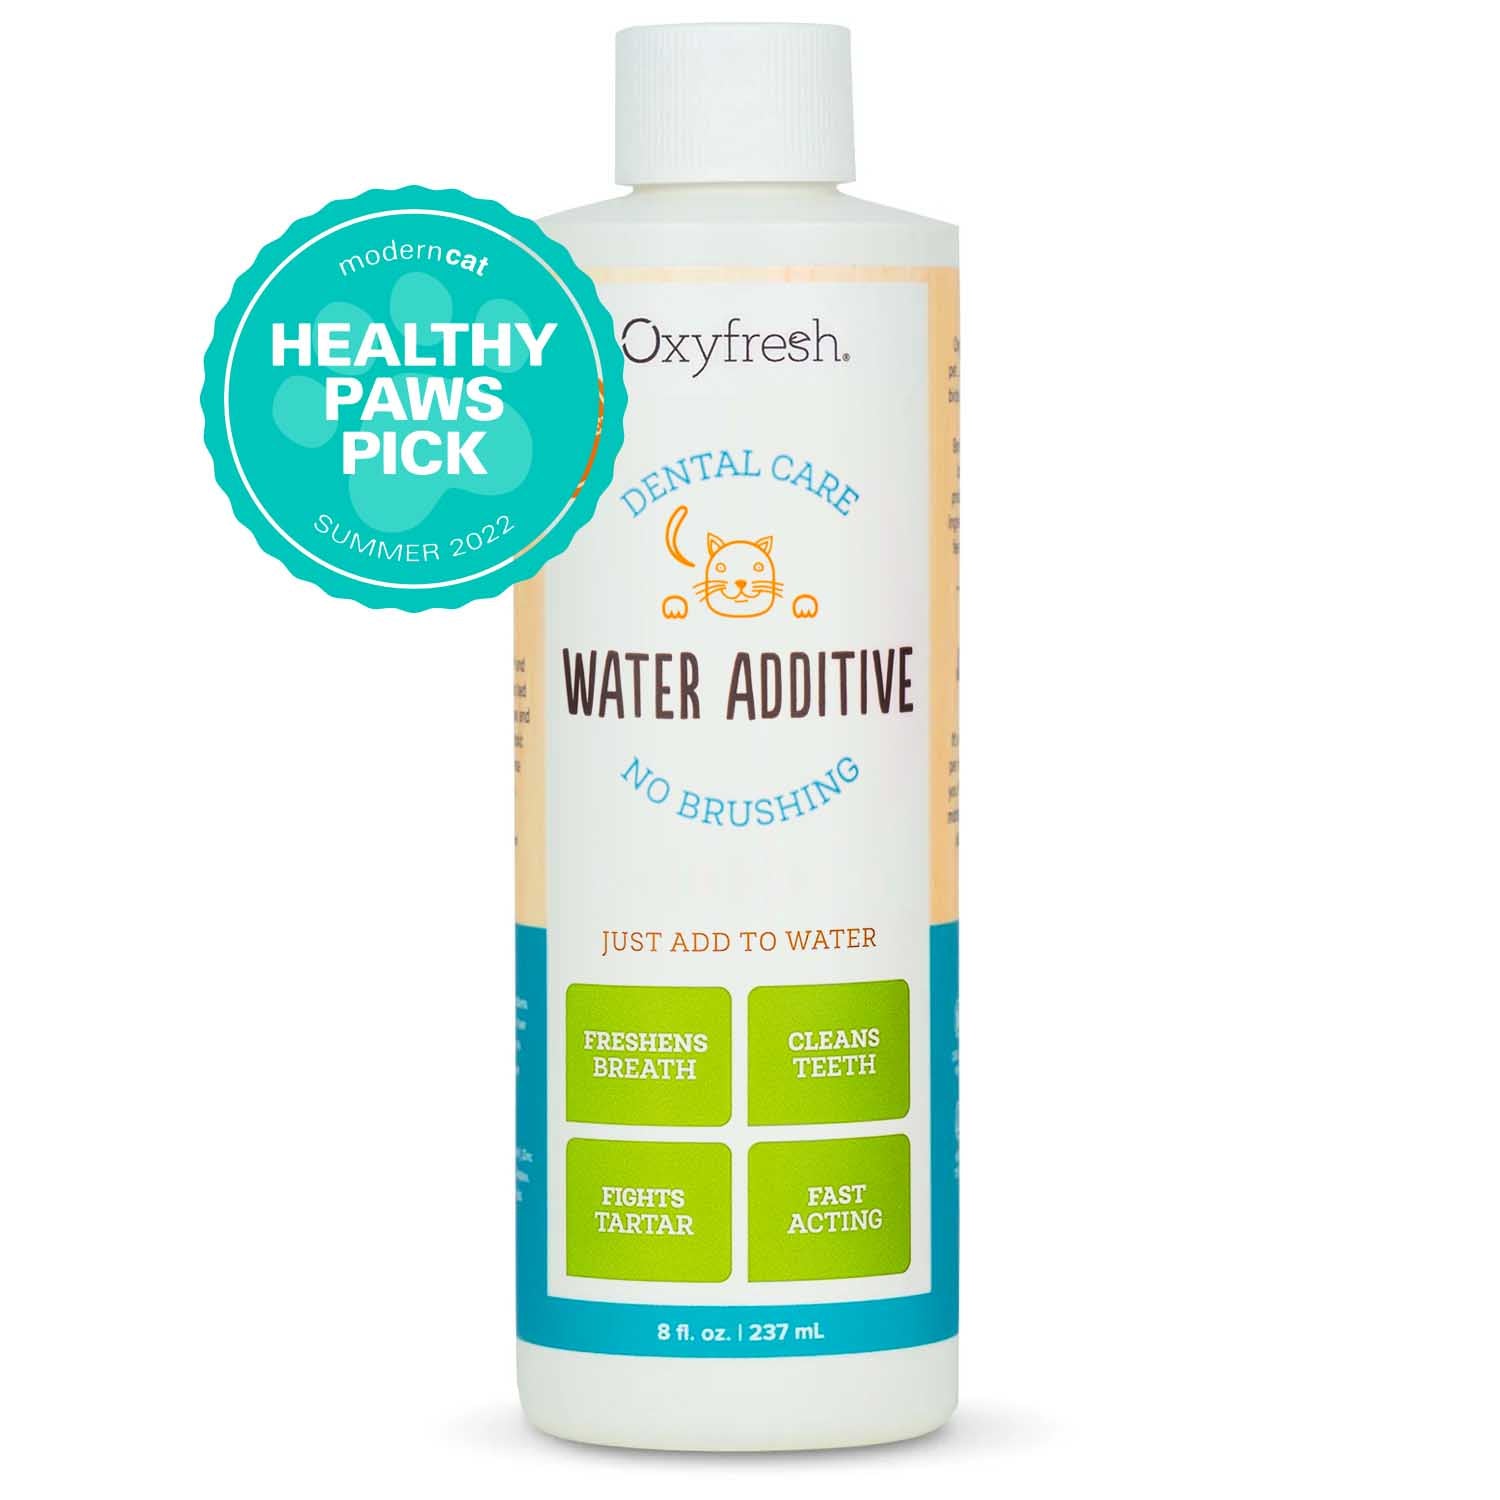 Oxyfresh cat water additive modern dog healthy paws pick award